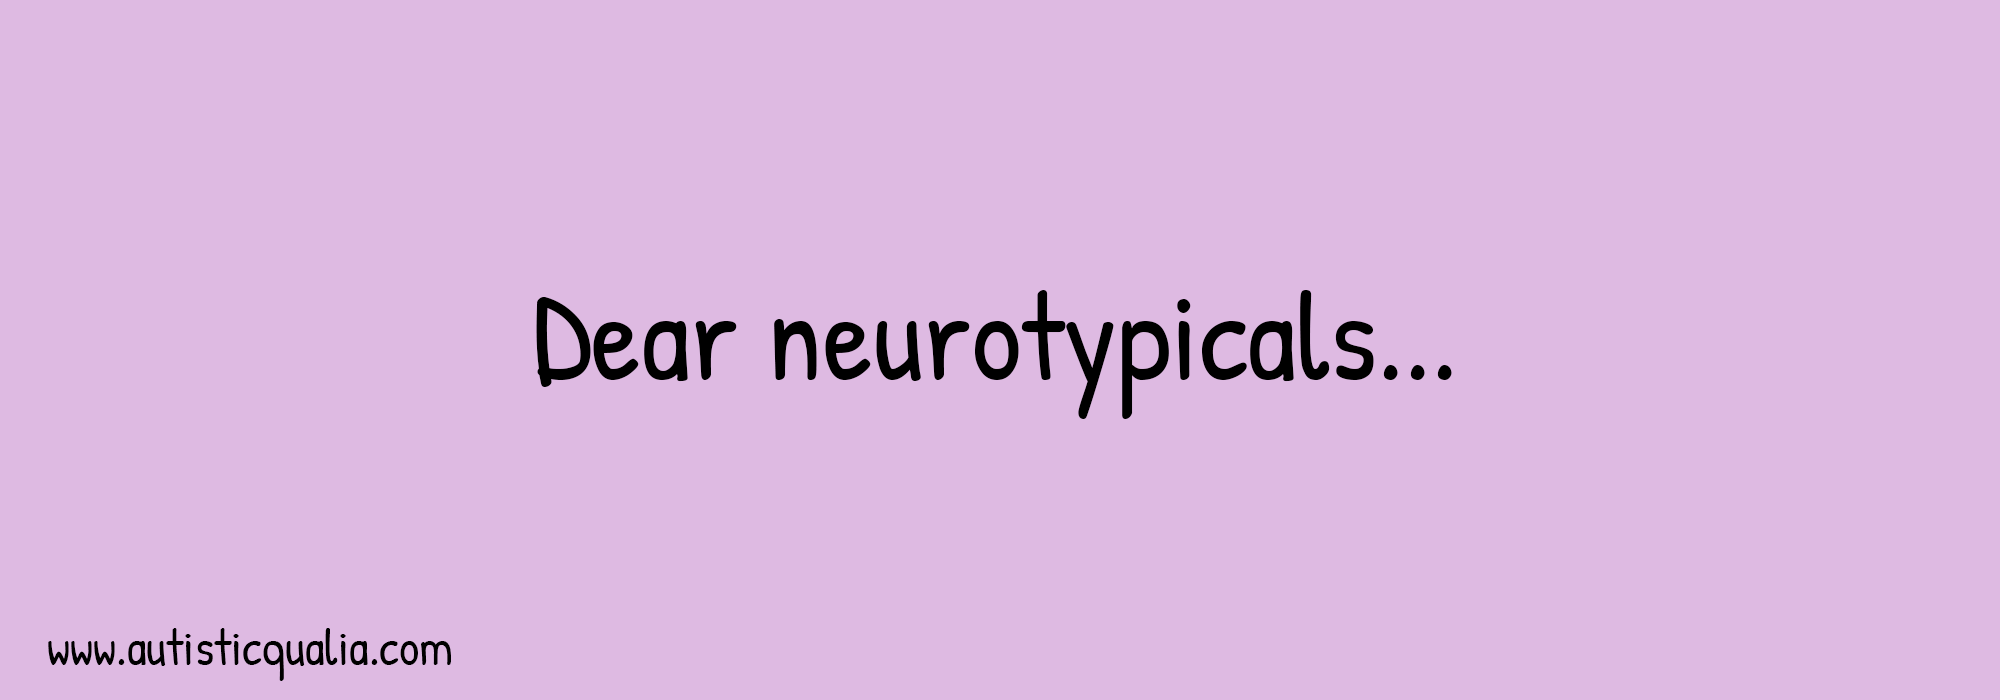 Dear neurotypicals